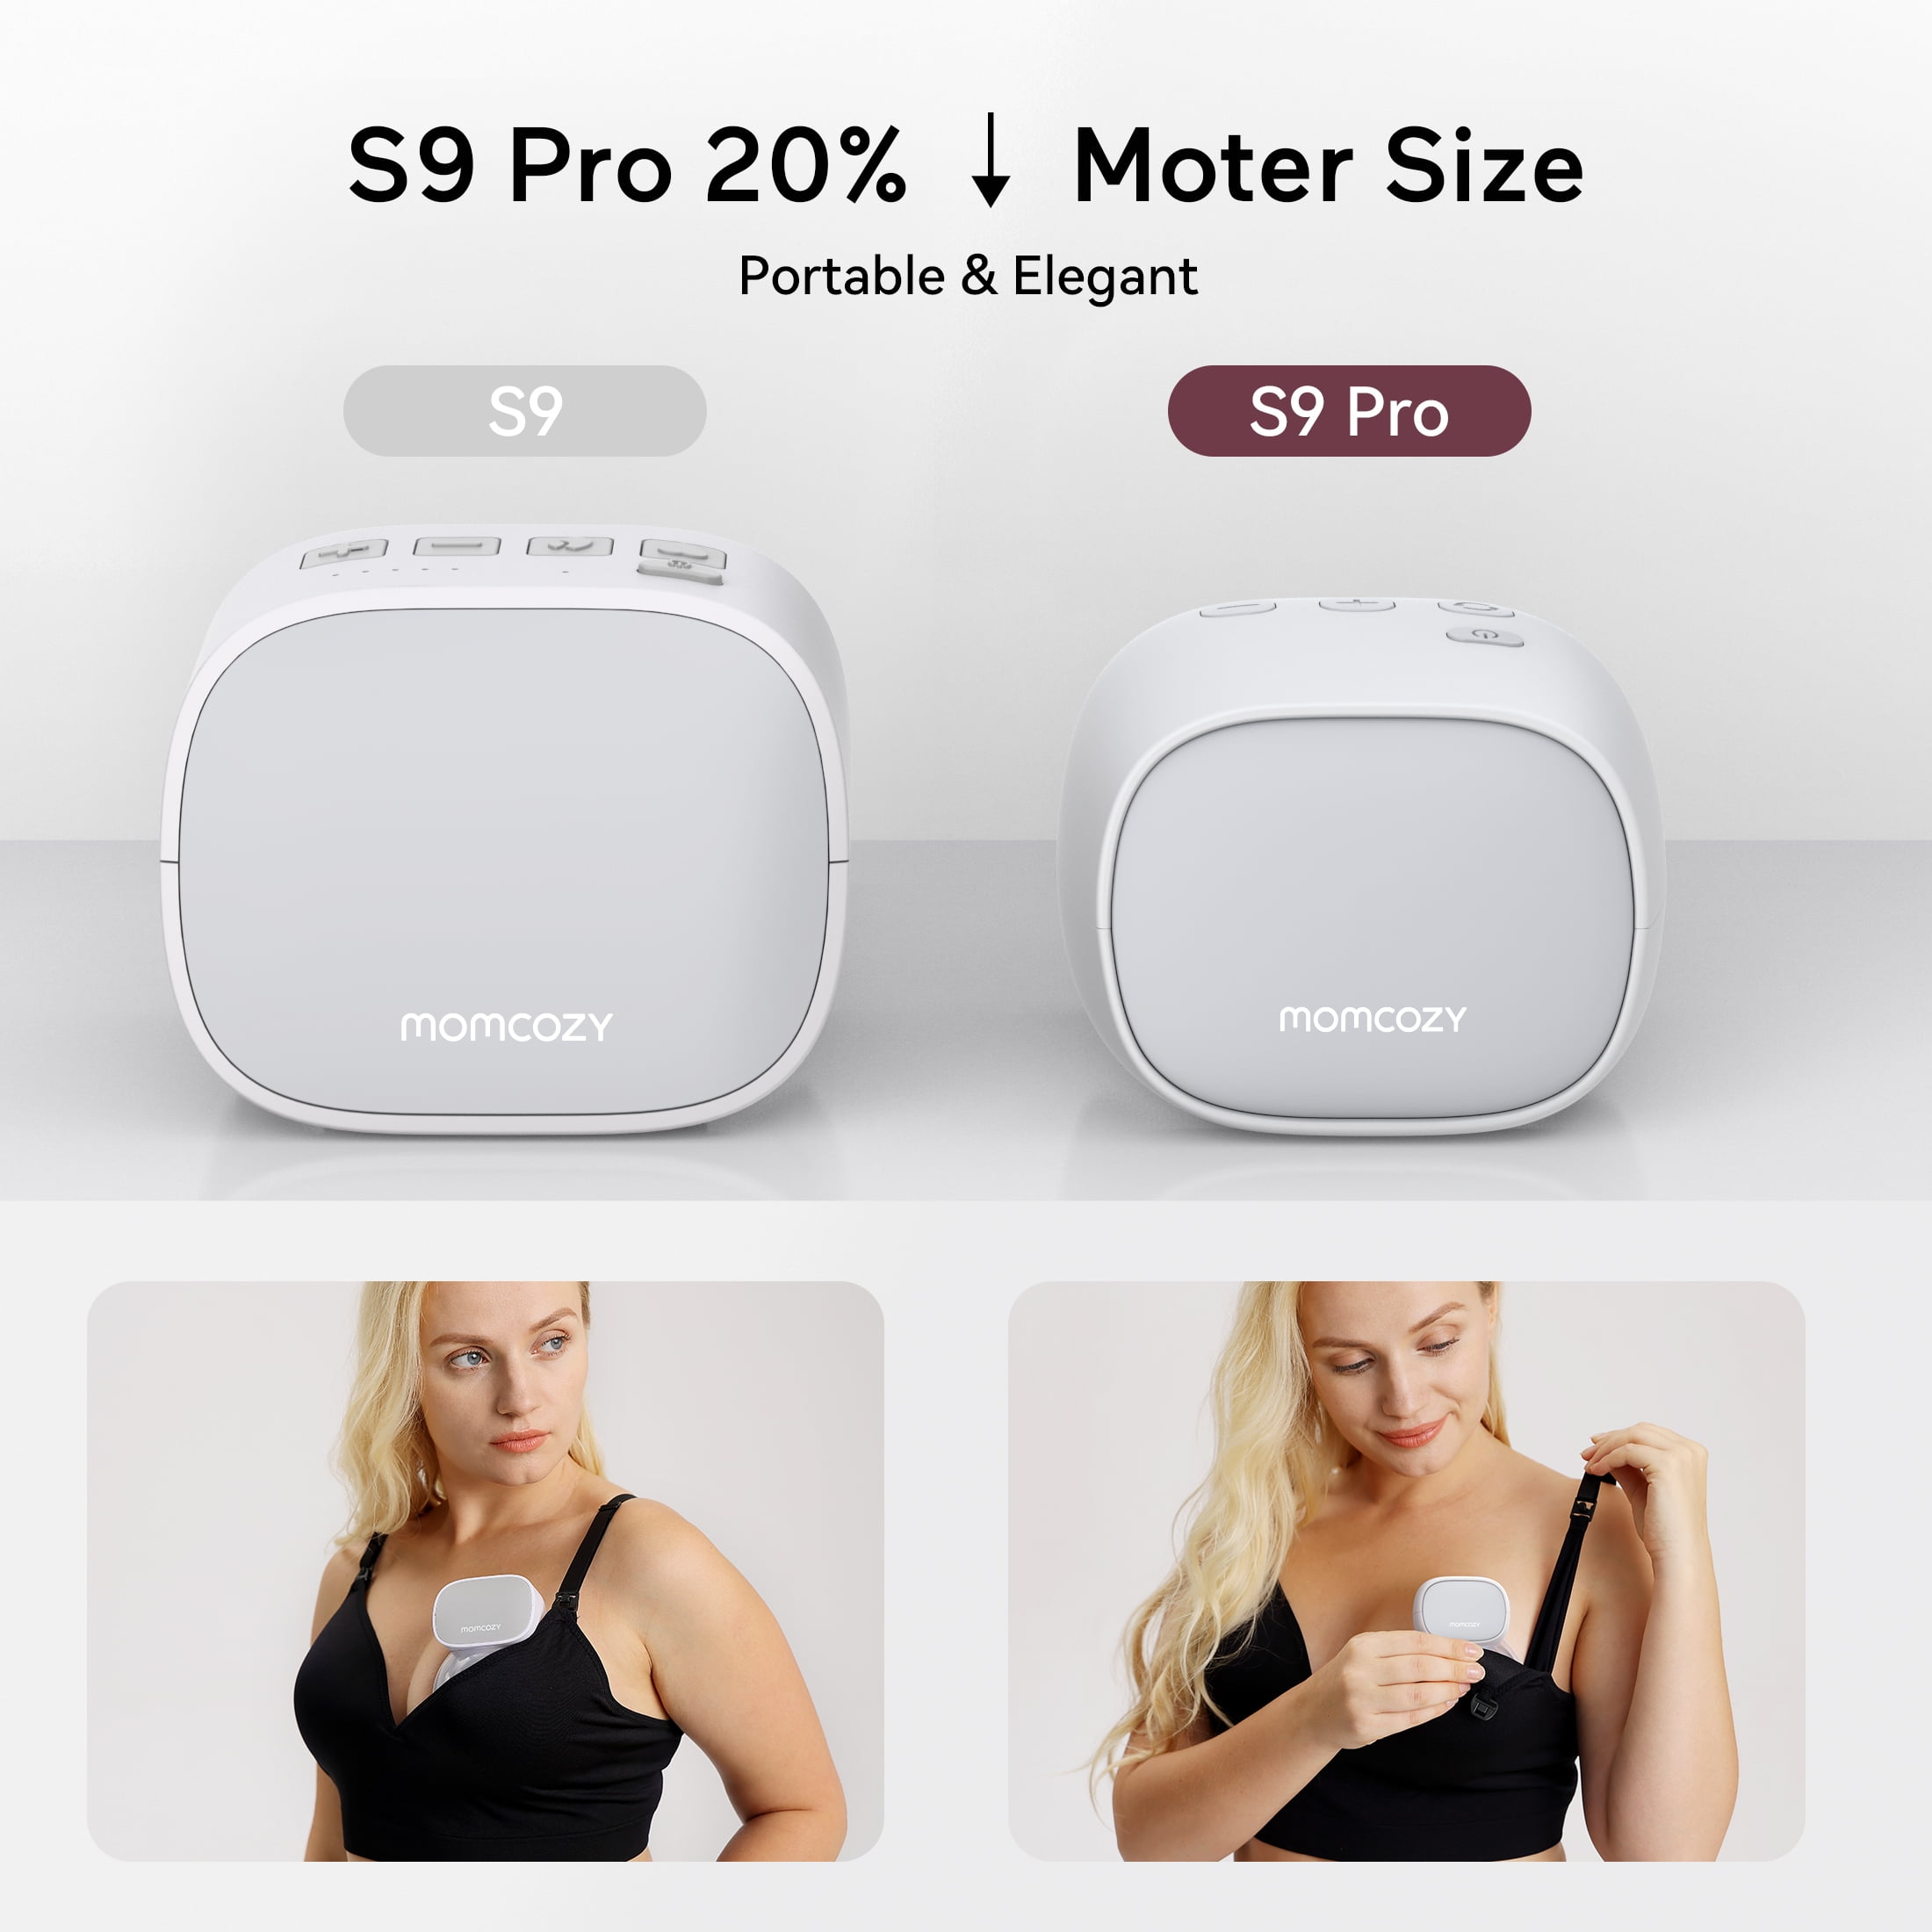 S9 Pro Bag Bundle: Double S9 Pro Pumps and Breastmilk Storage Bags